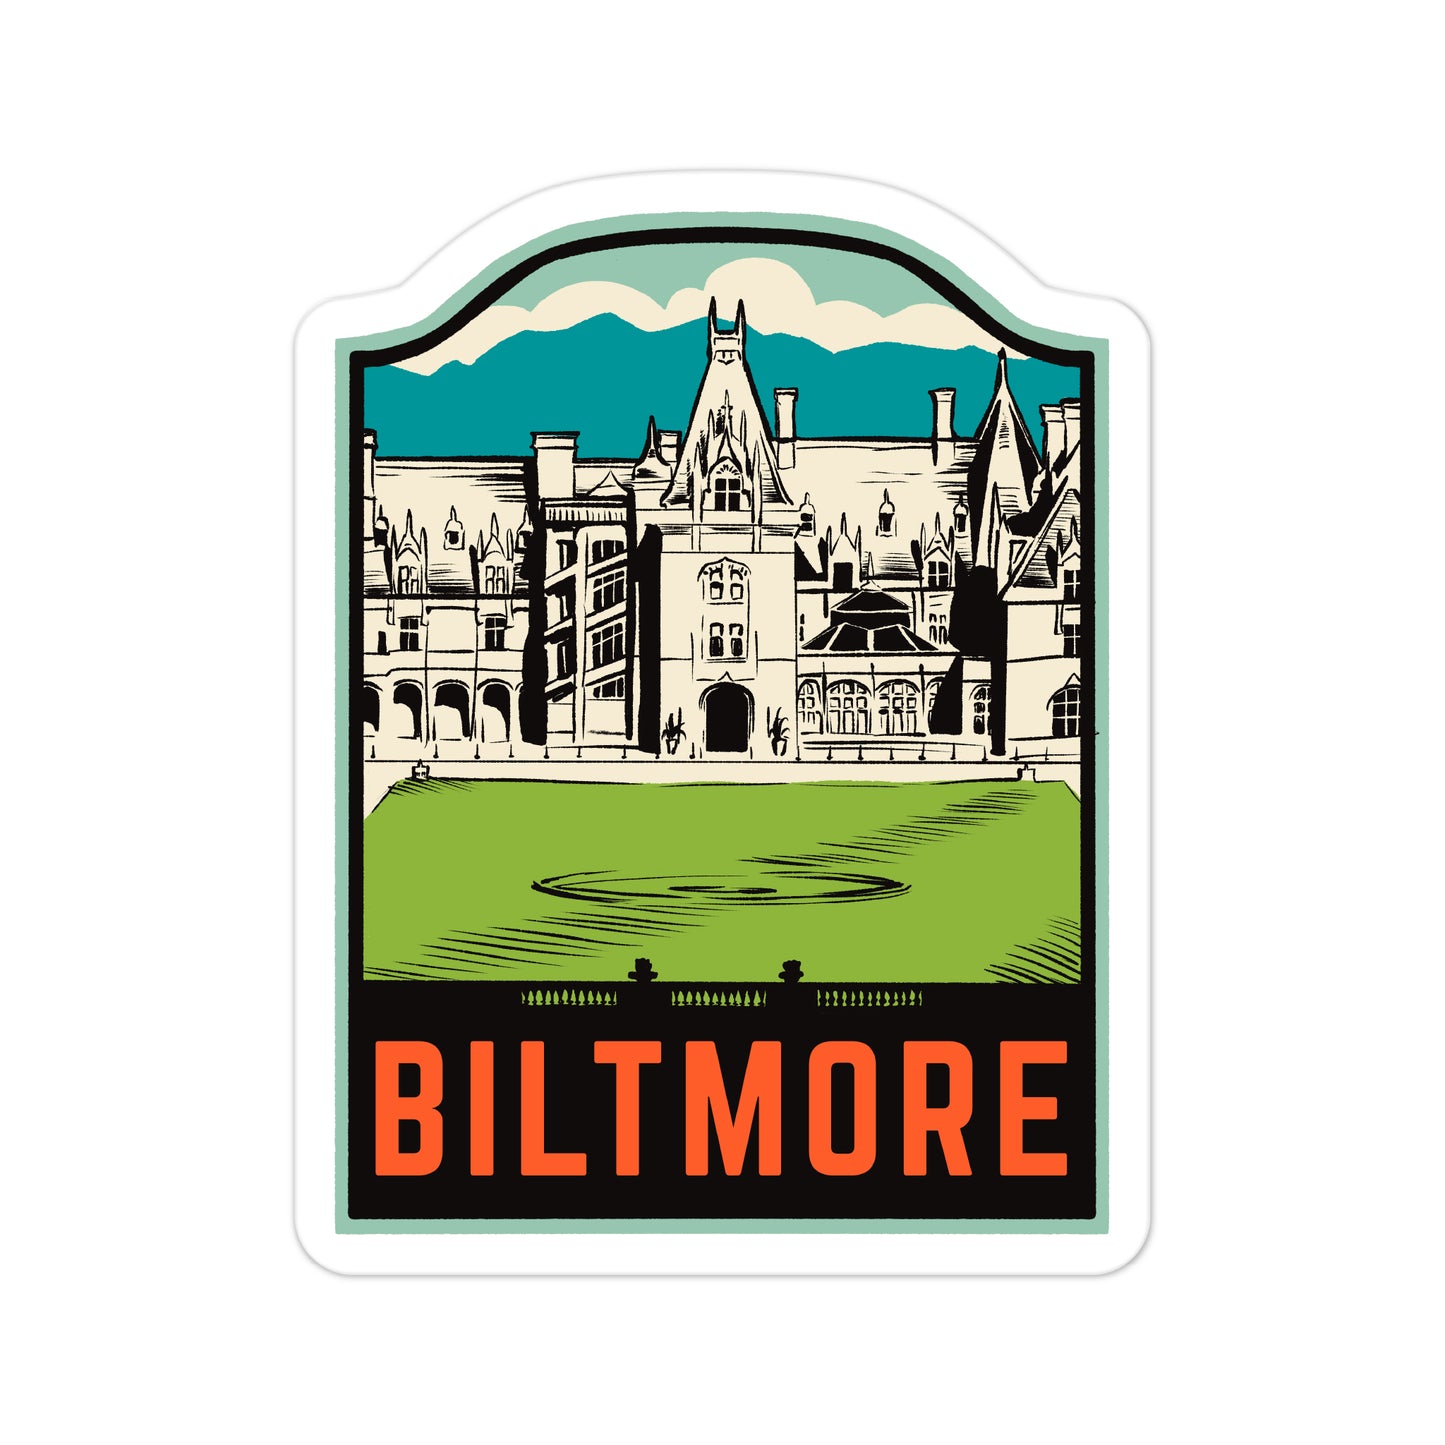 A sticker of Biltmore North Carolina